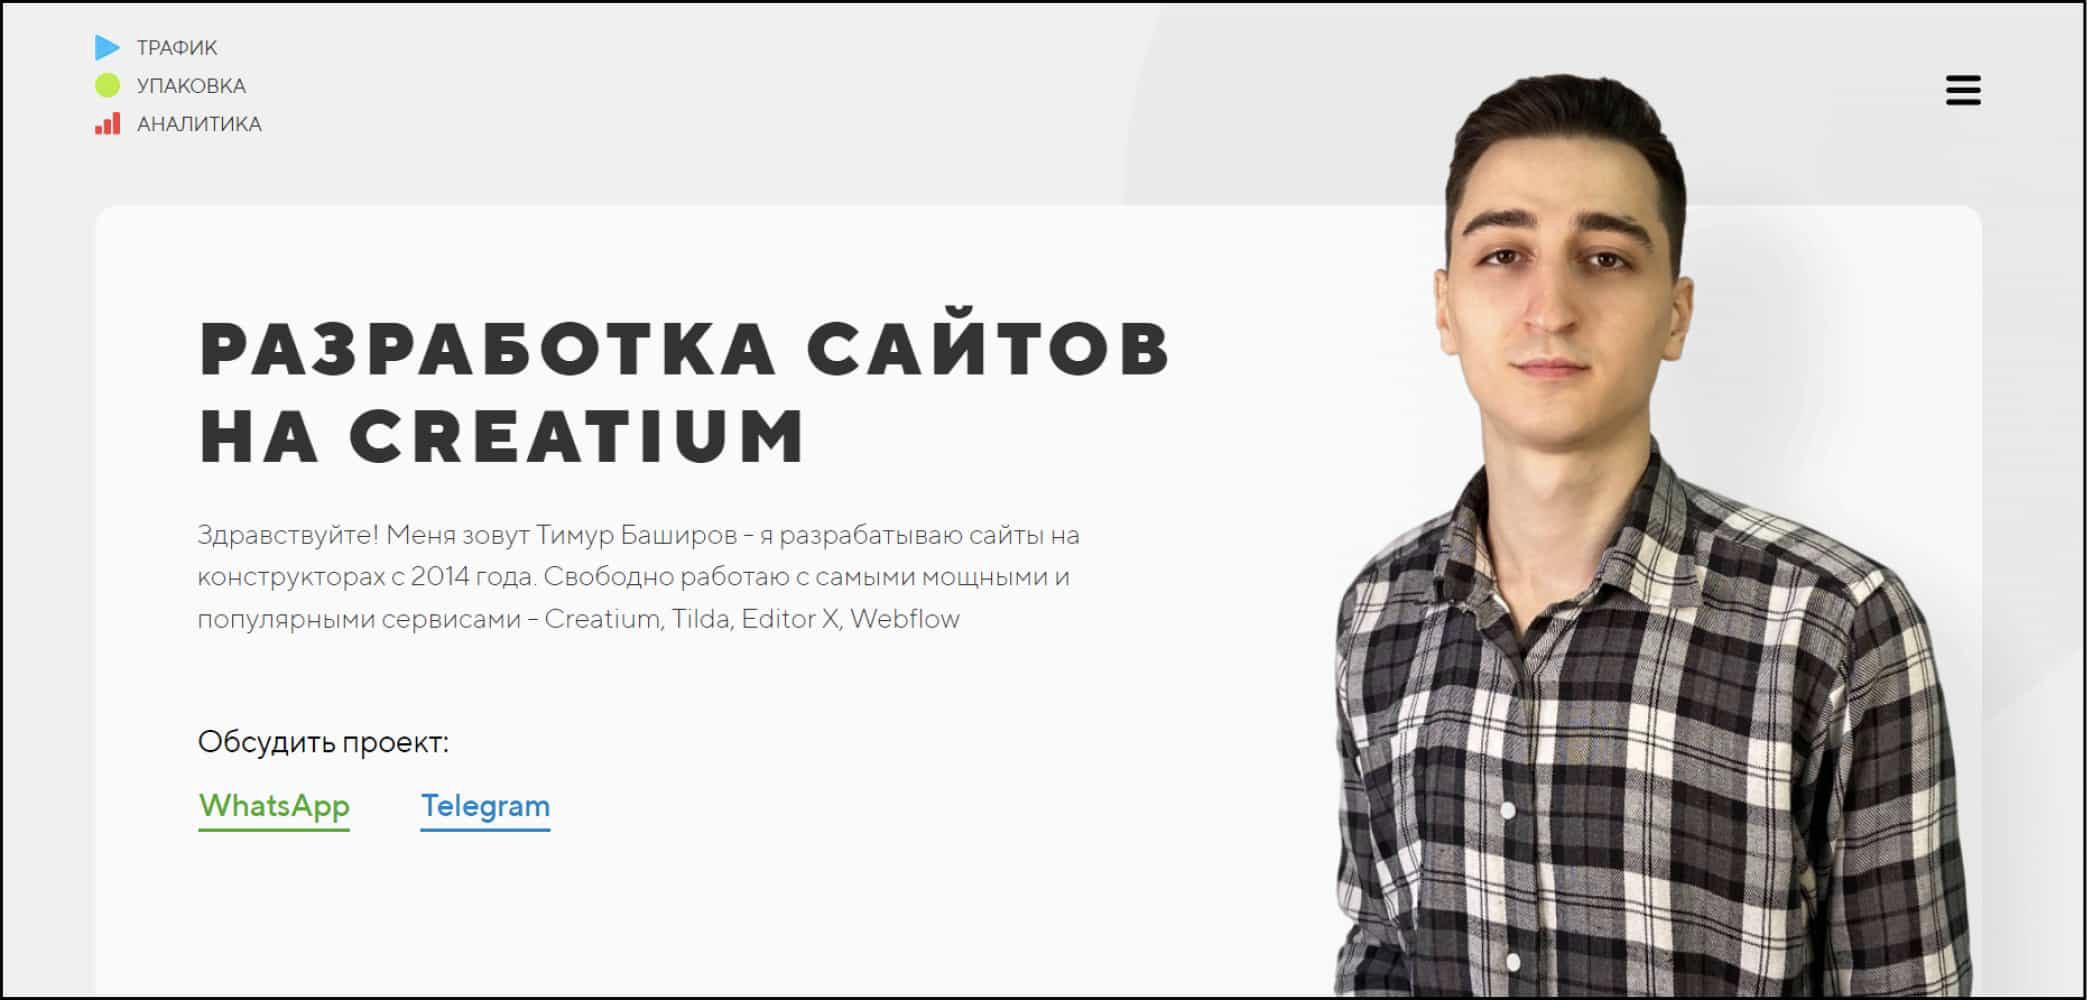 Сайт-визитка веб-разработчика. Источник: https://timurbashirov.ru/creatium